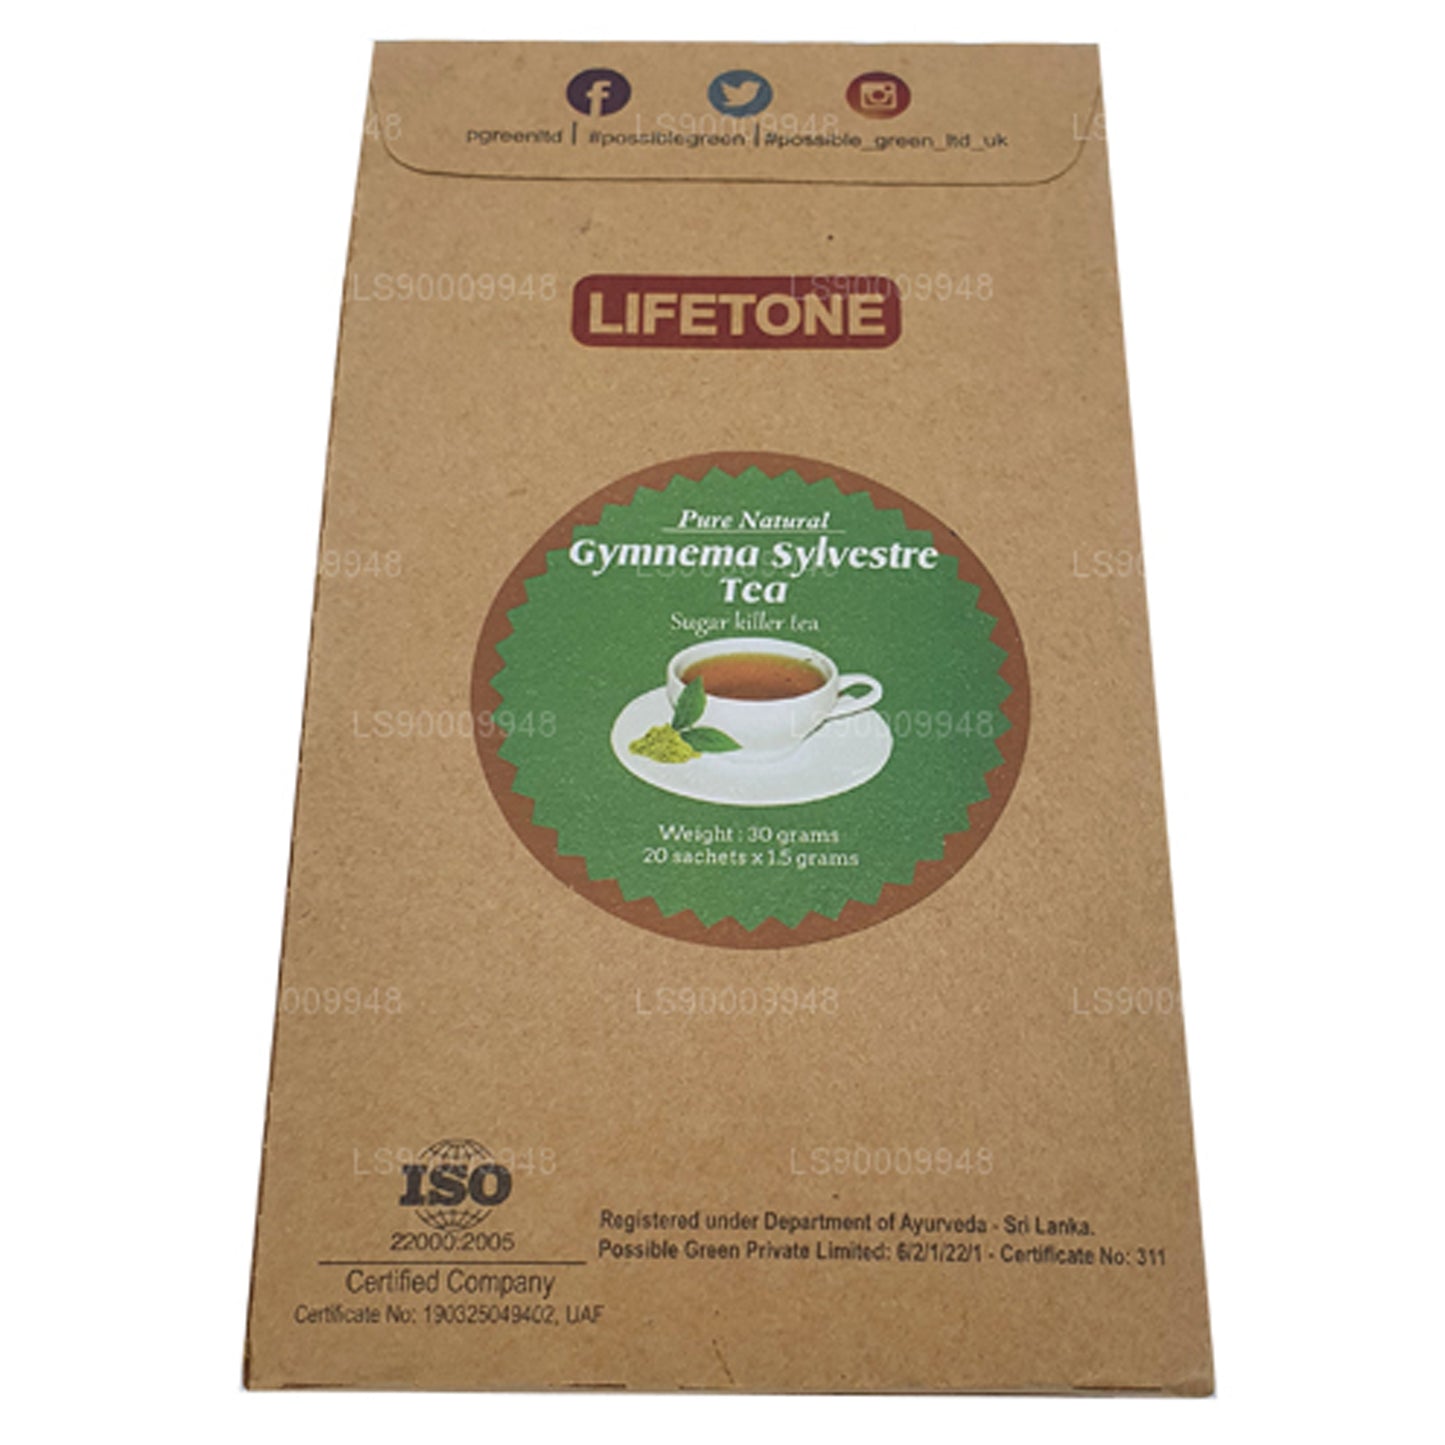 Lifetone Gymnema Sylvestre Tea (30g)